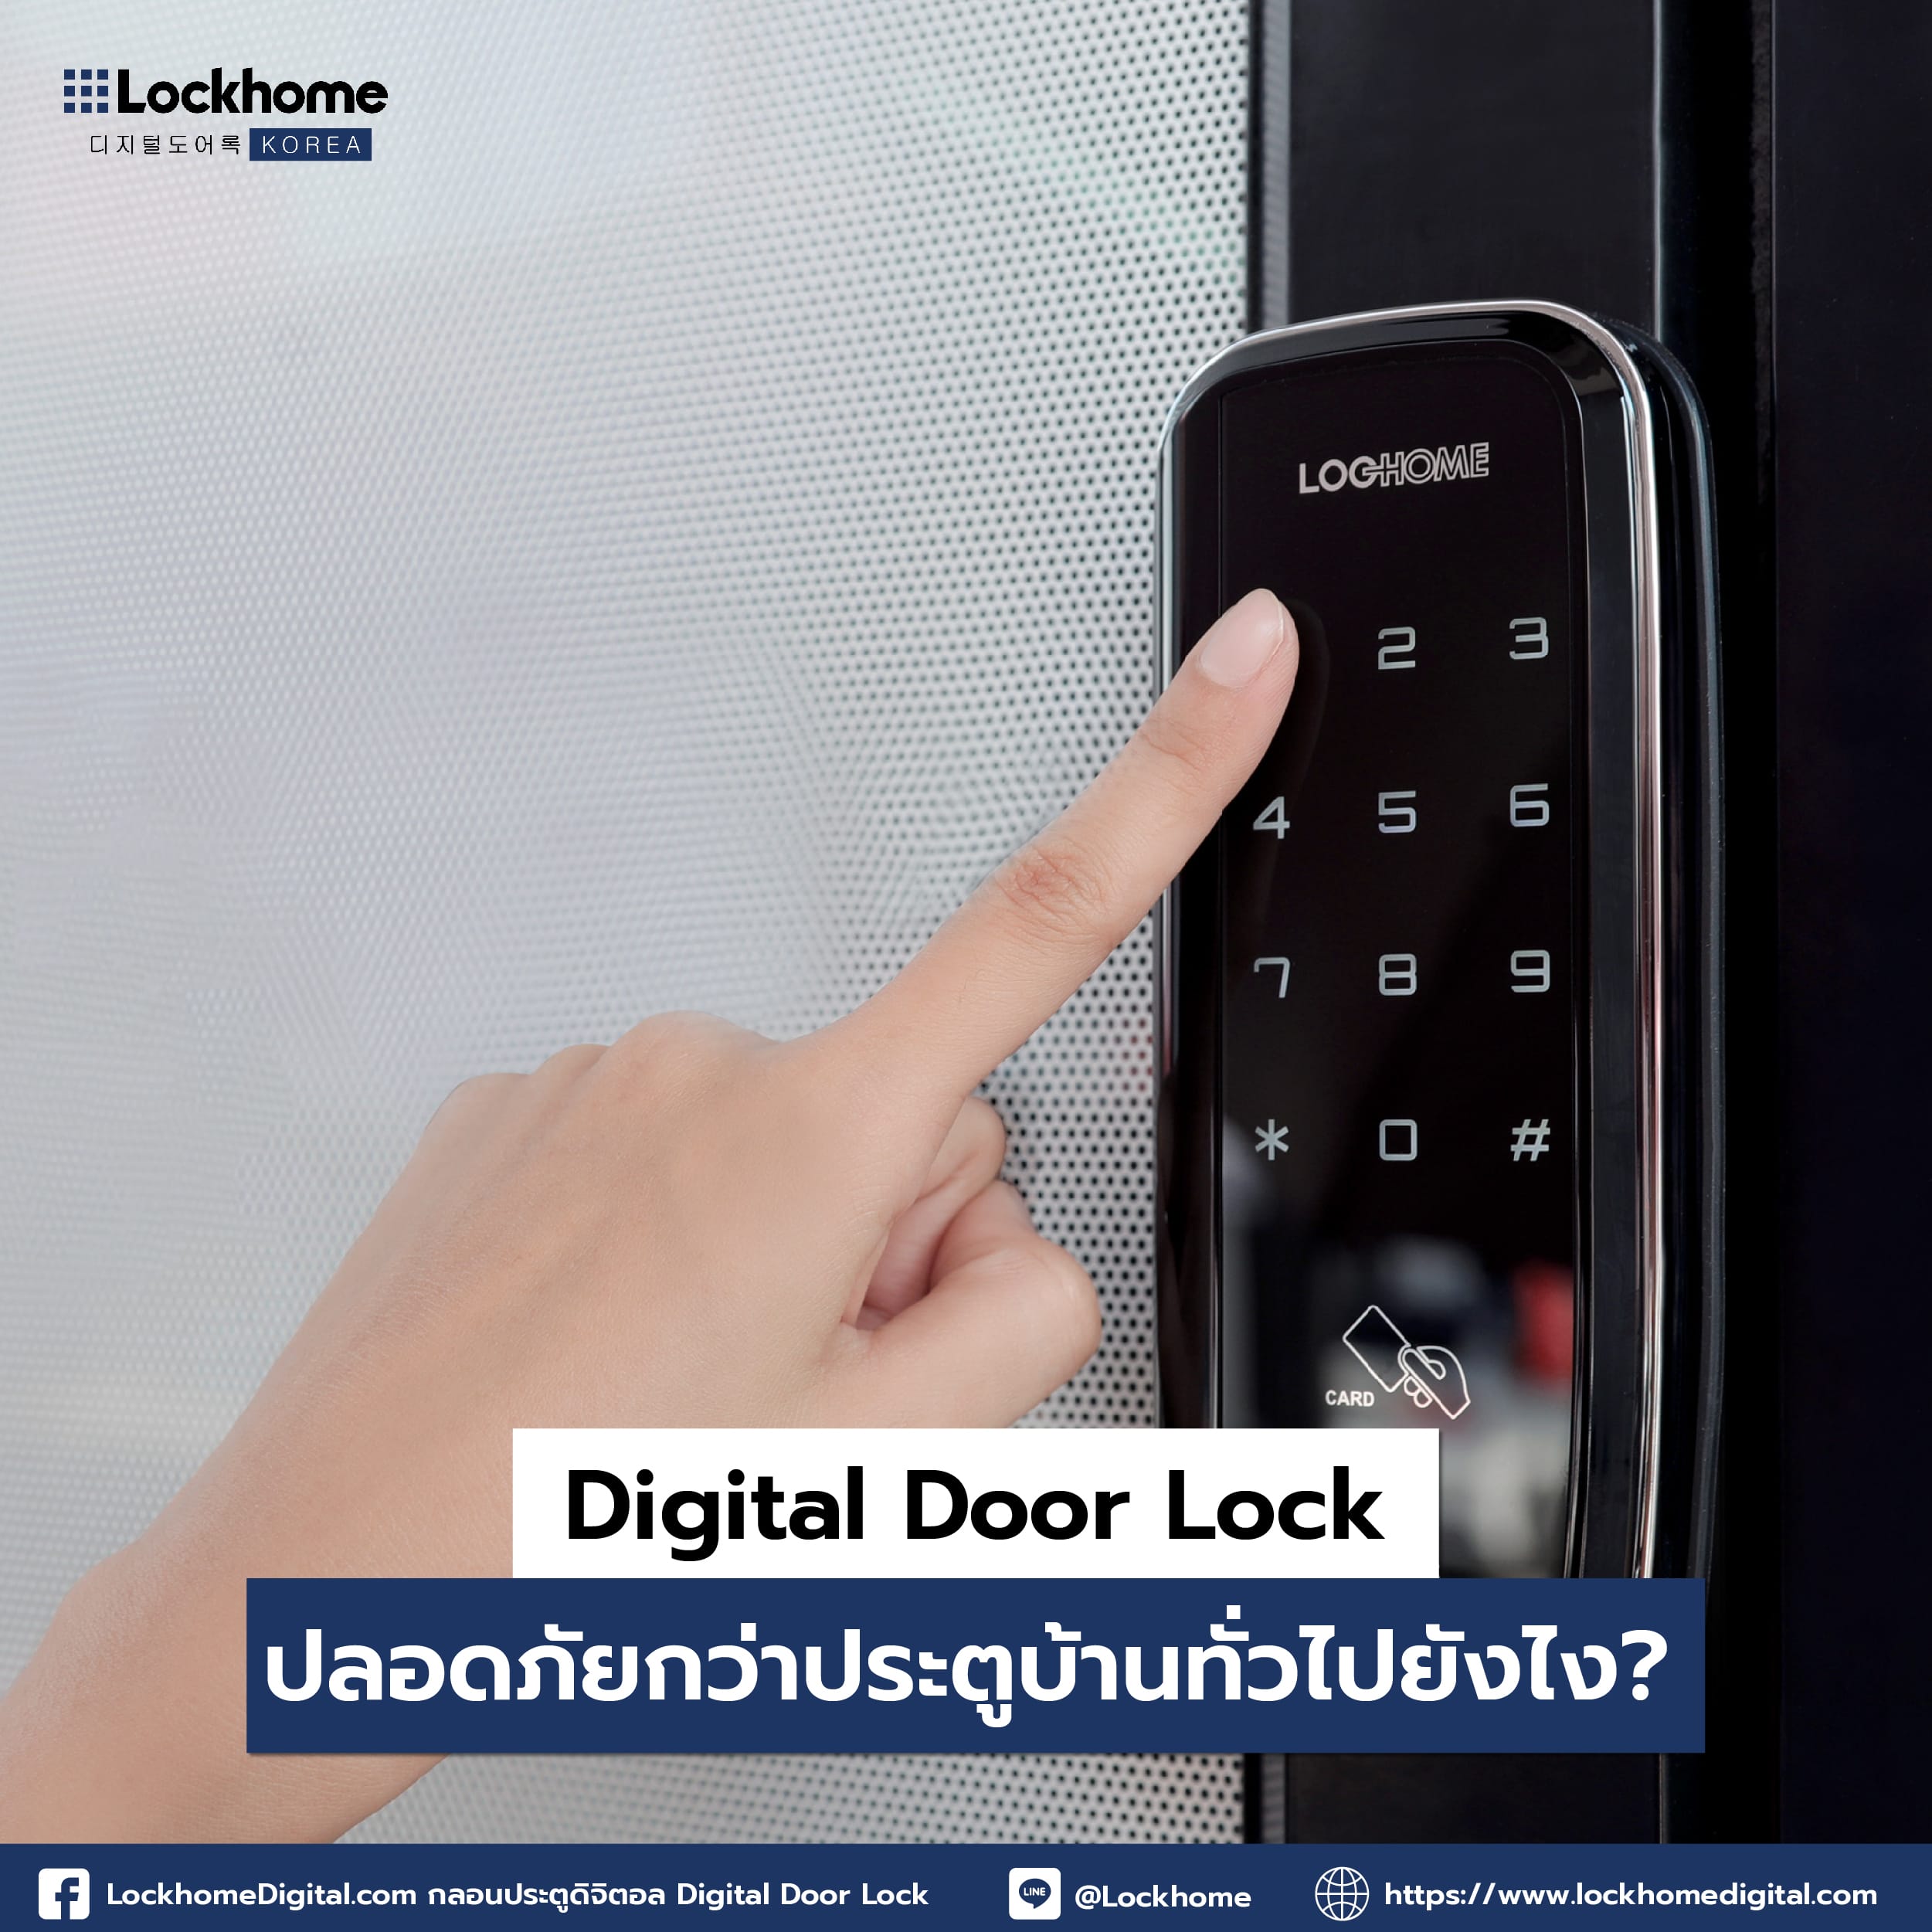 Digital Door Lock ปลอดภัยกว่าประตูบ้านทั่วไปยังไง ?